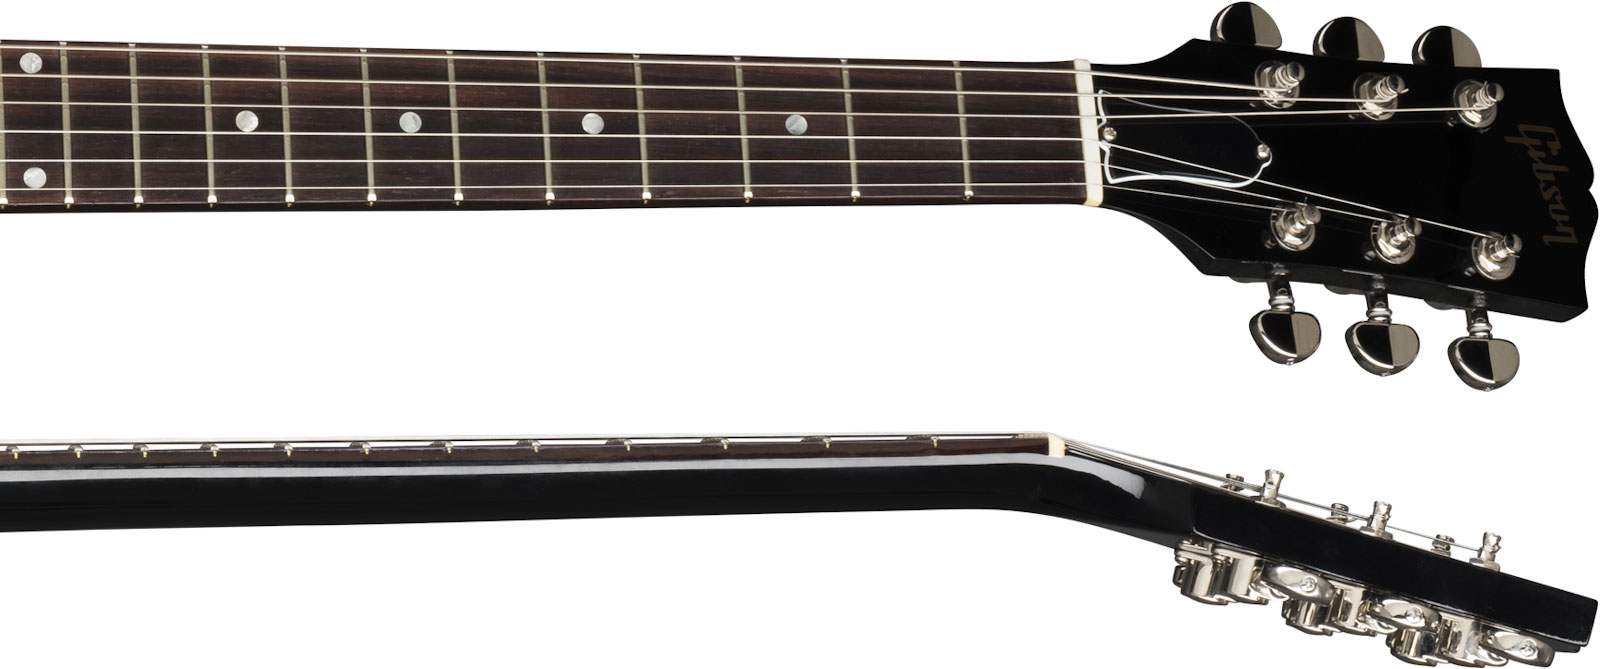 Gibson Es-335 Dot P-90 2019 Ht Rw - Ebony - Semi-hollow electric guitar - Variation 3